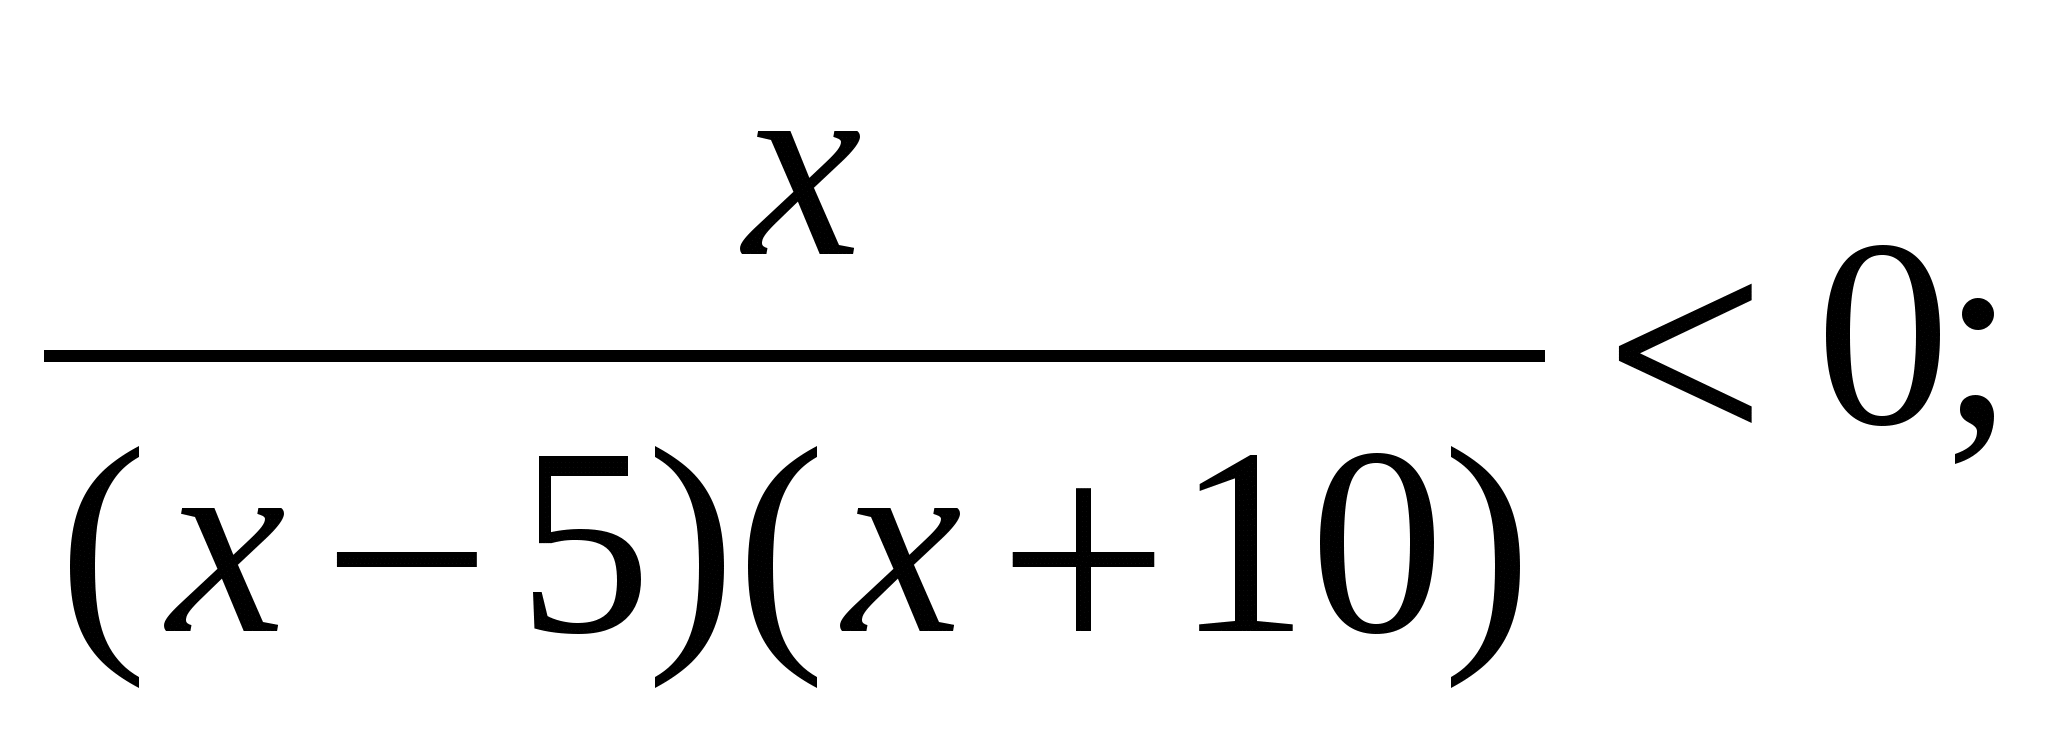 Урок по алгебре Метод интервалов (9 класс)